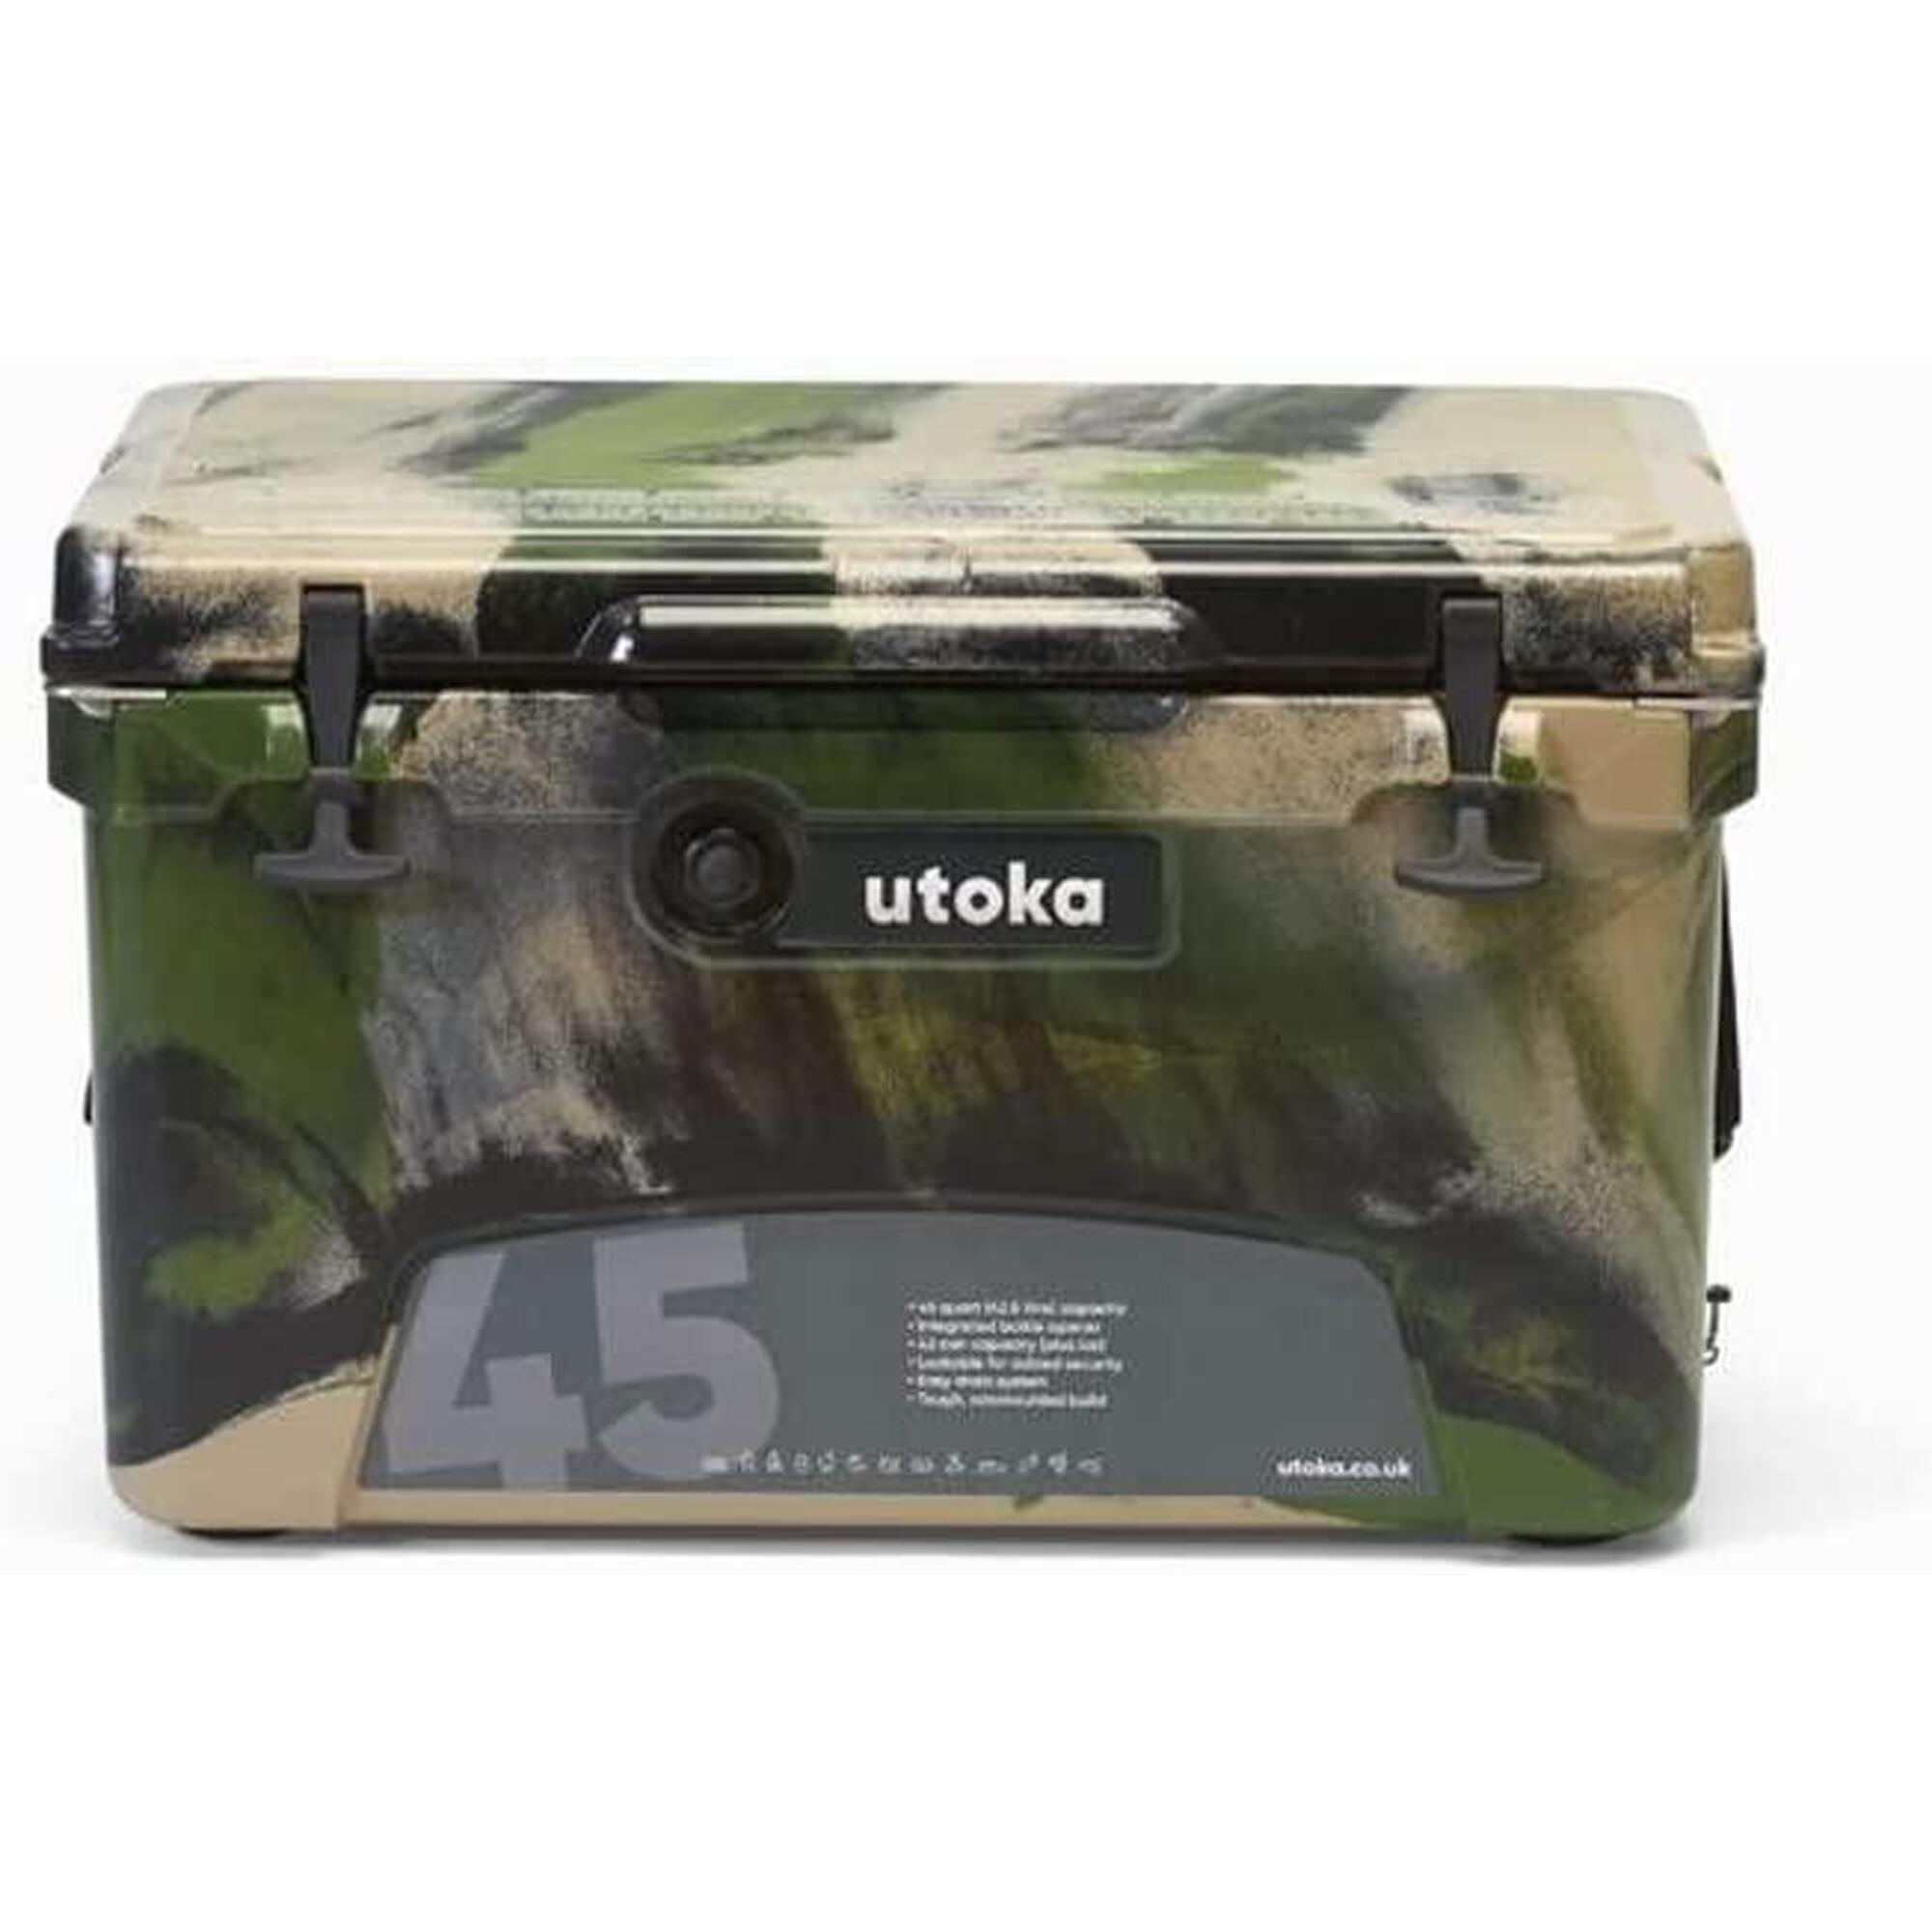 UTOKA Utoka 45 Cooler, Portable Hard Cooler With Carry Handle - Camo